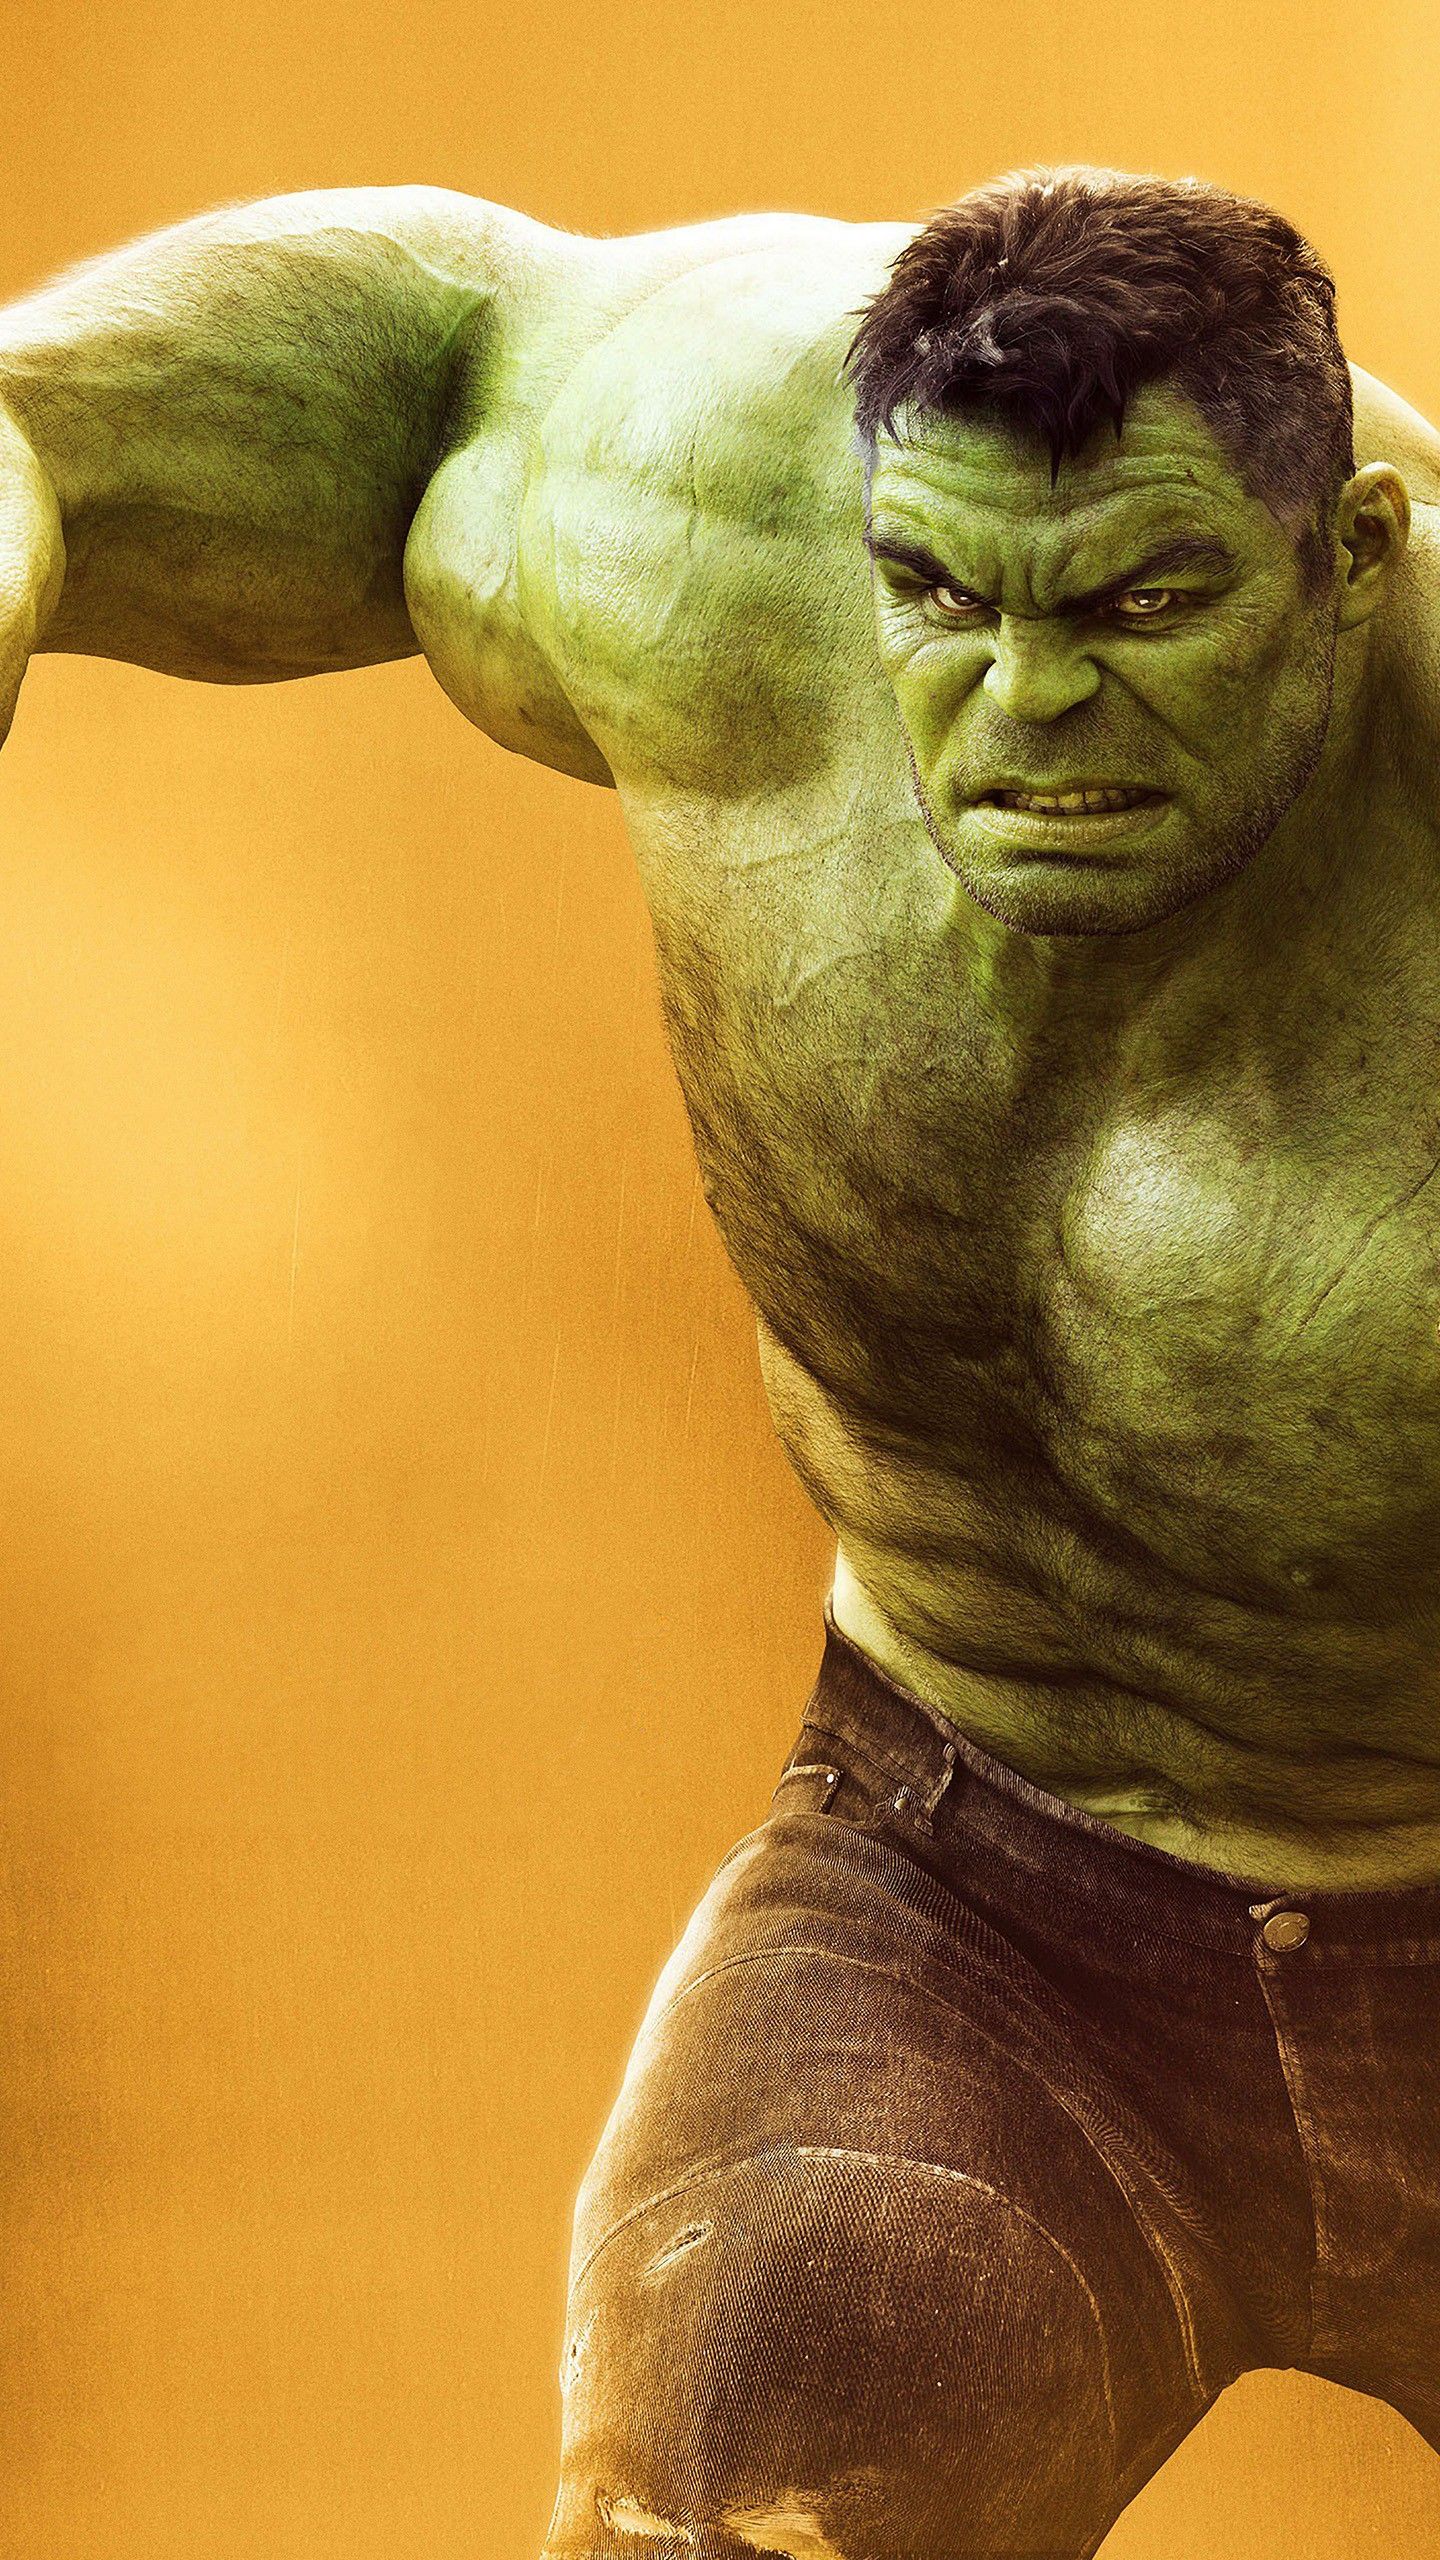 Hulk in Avengers Infinity War 4K Wallpaper